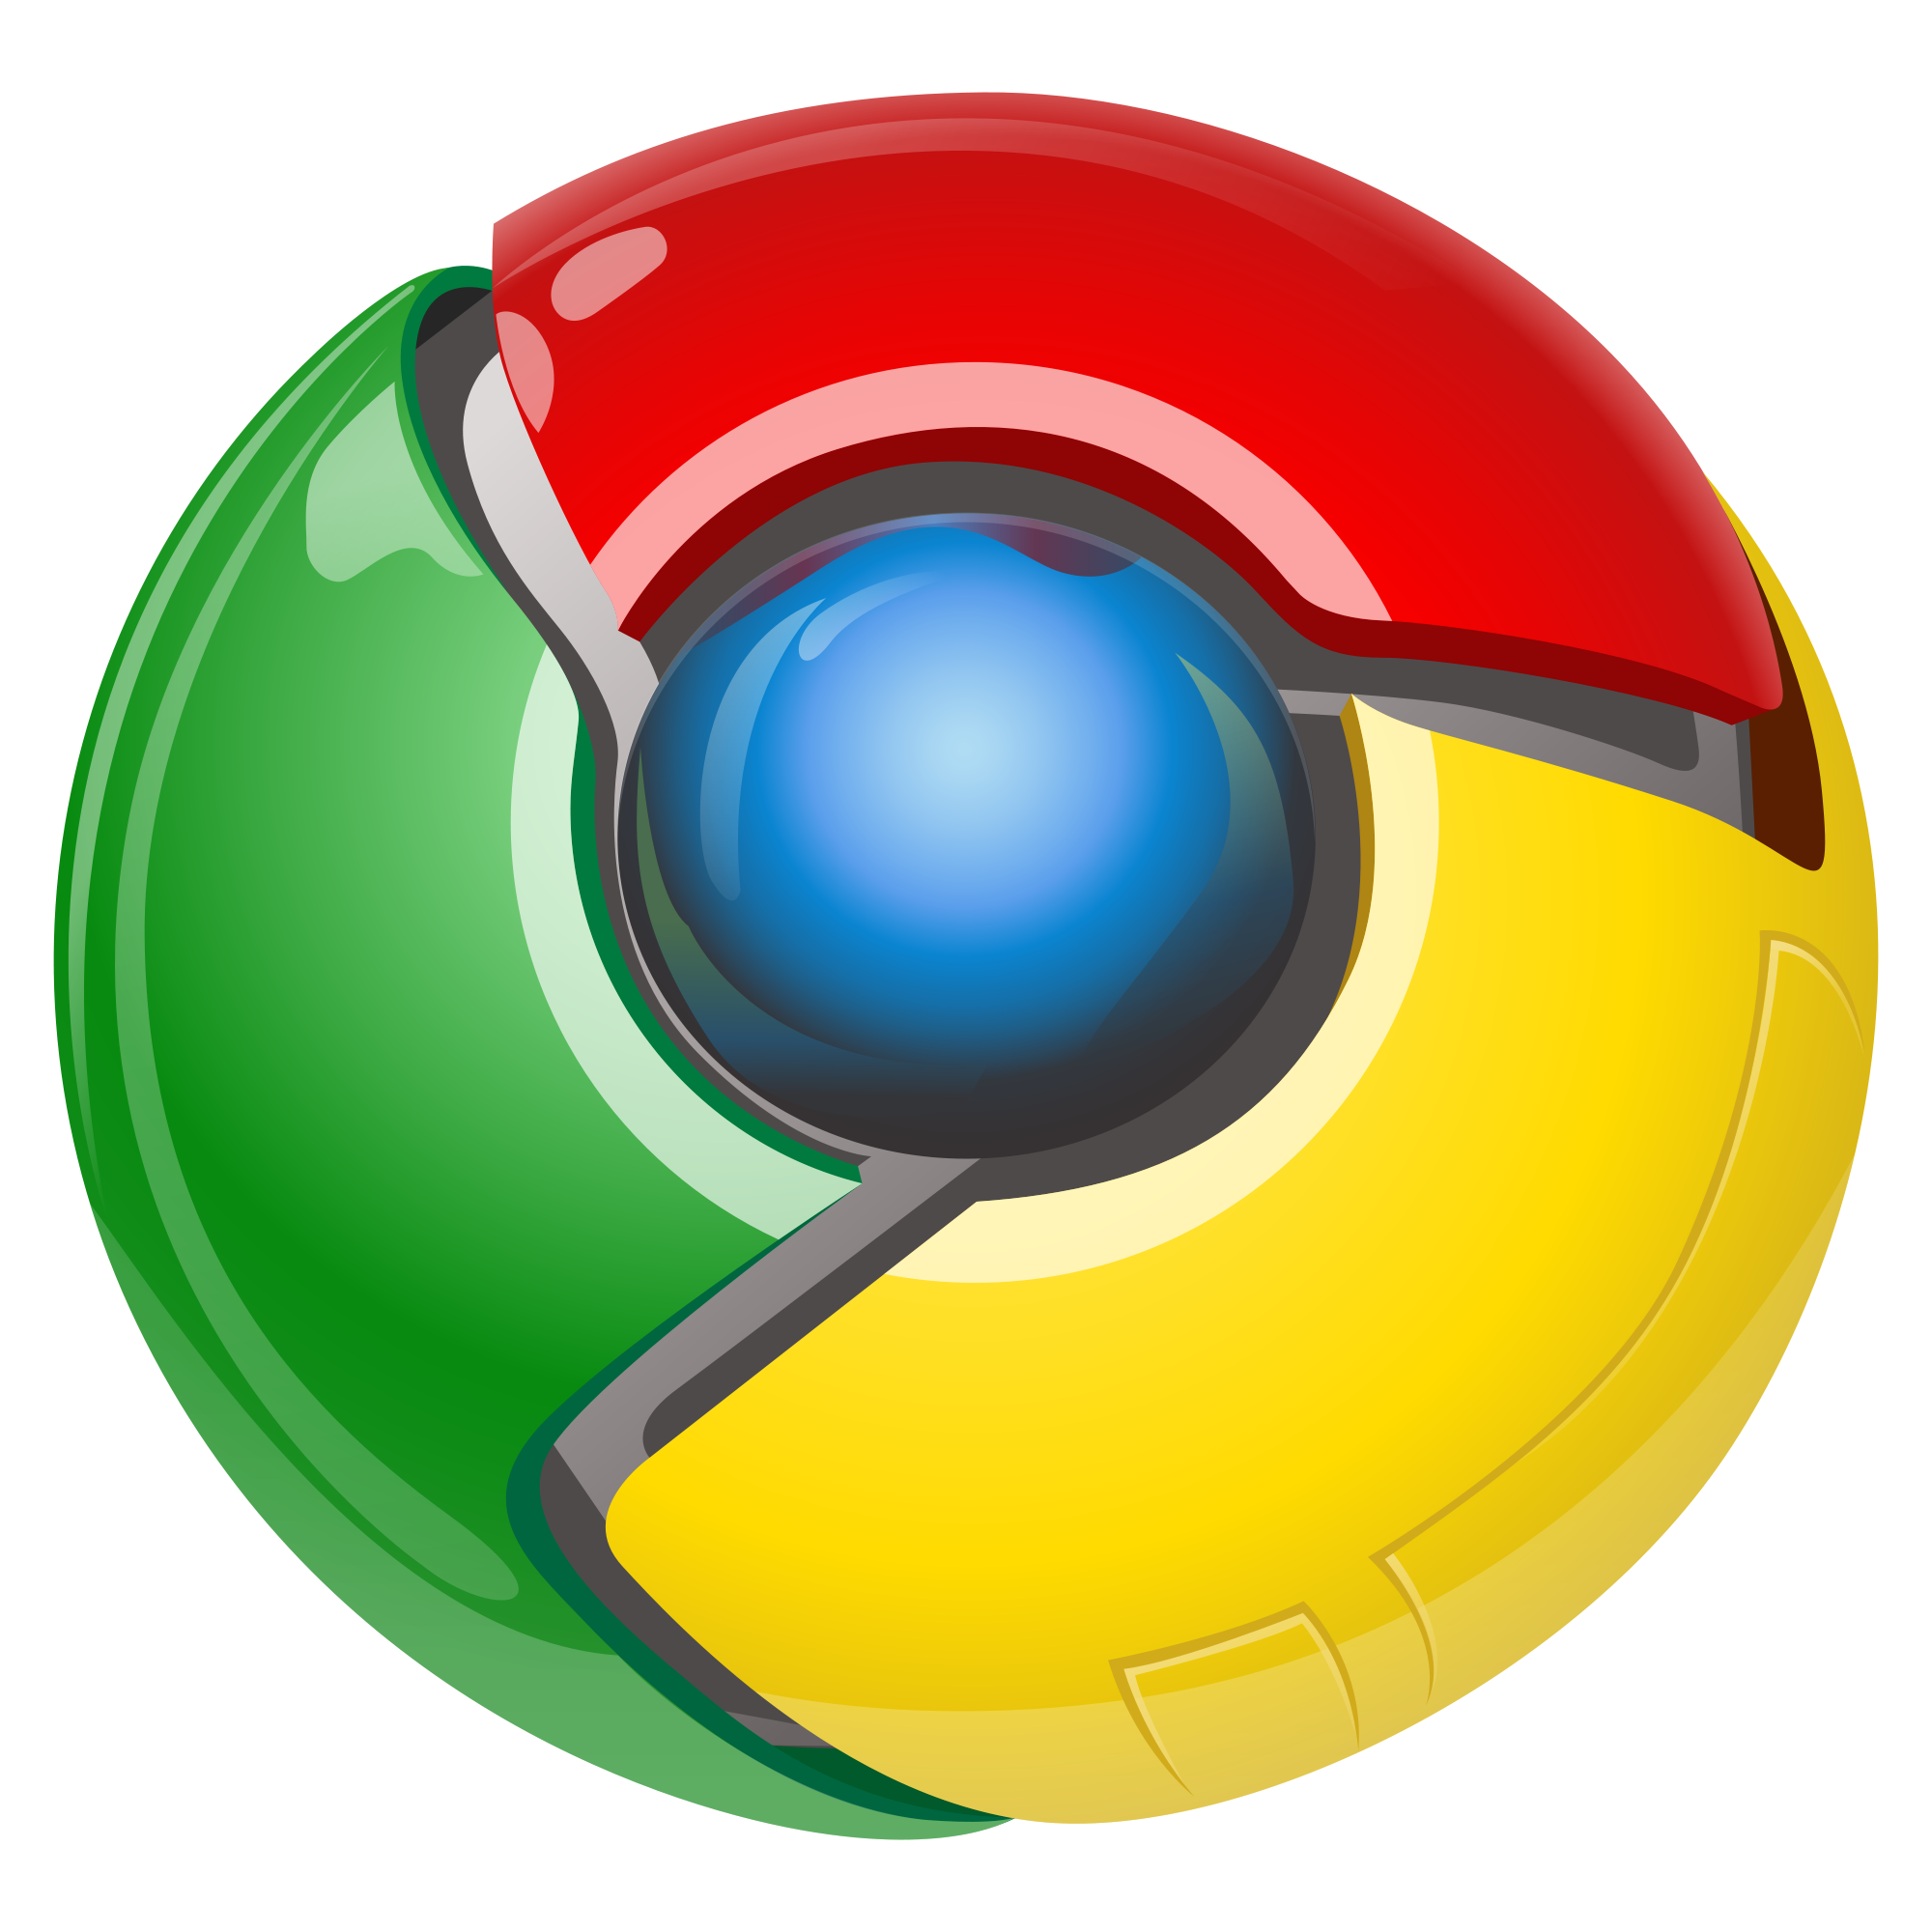 GoogleChromeのロゴ